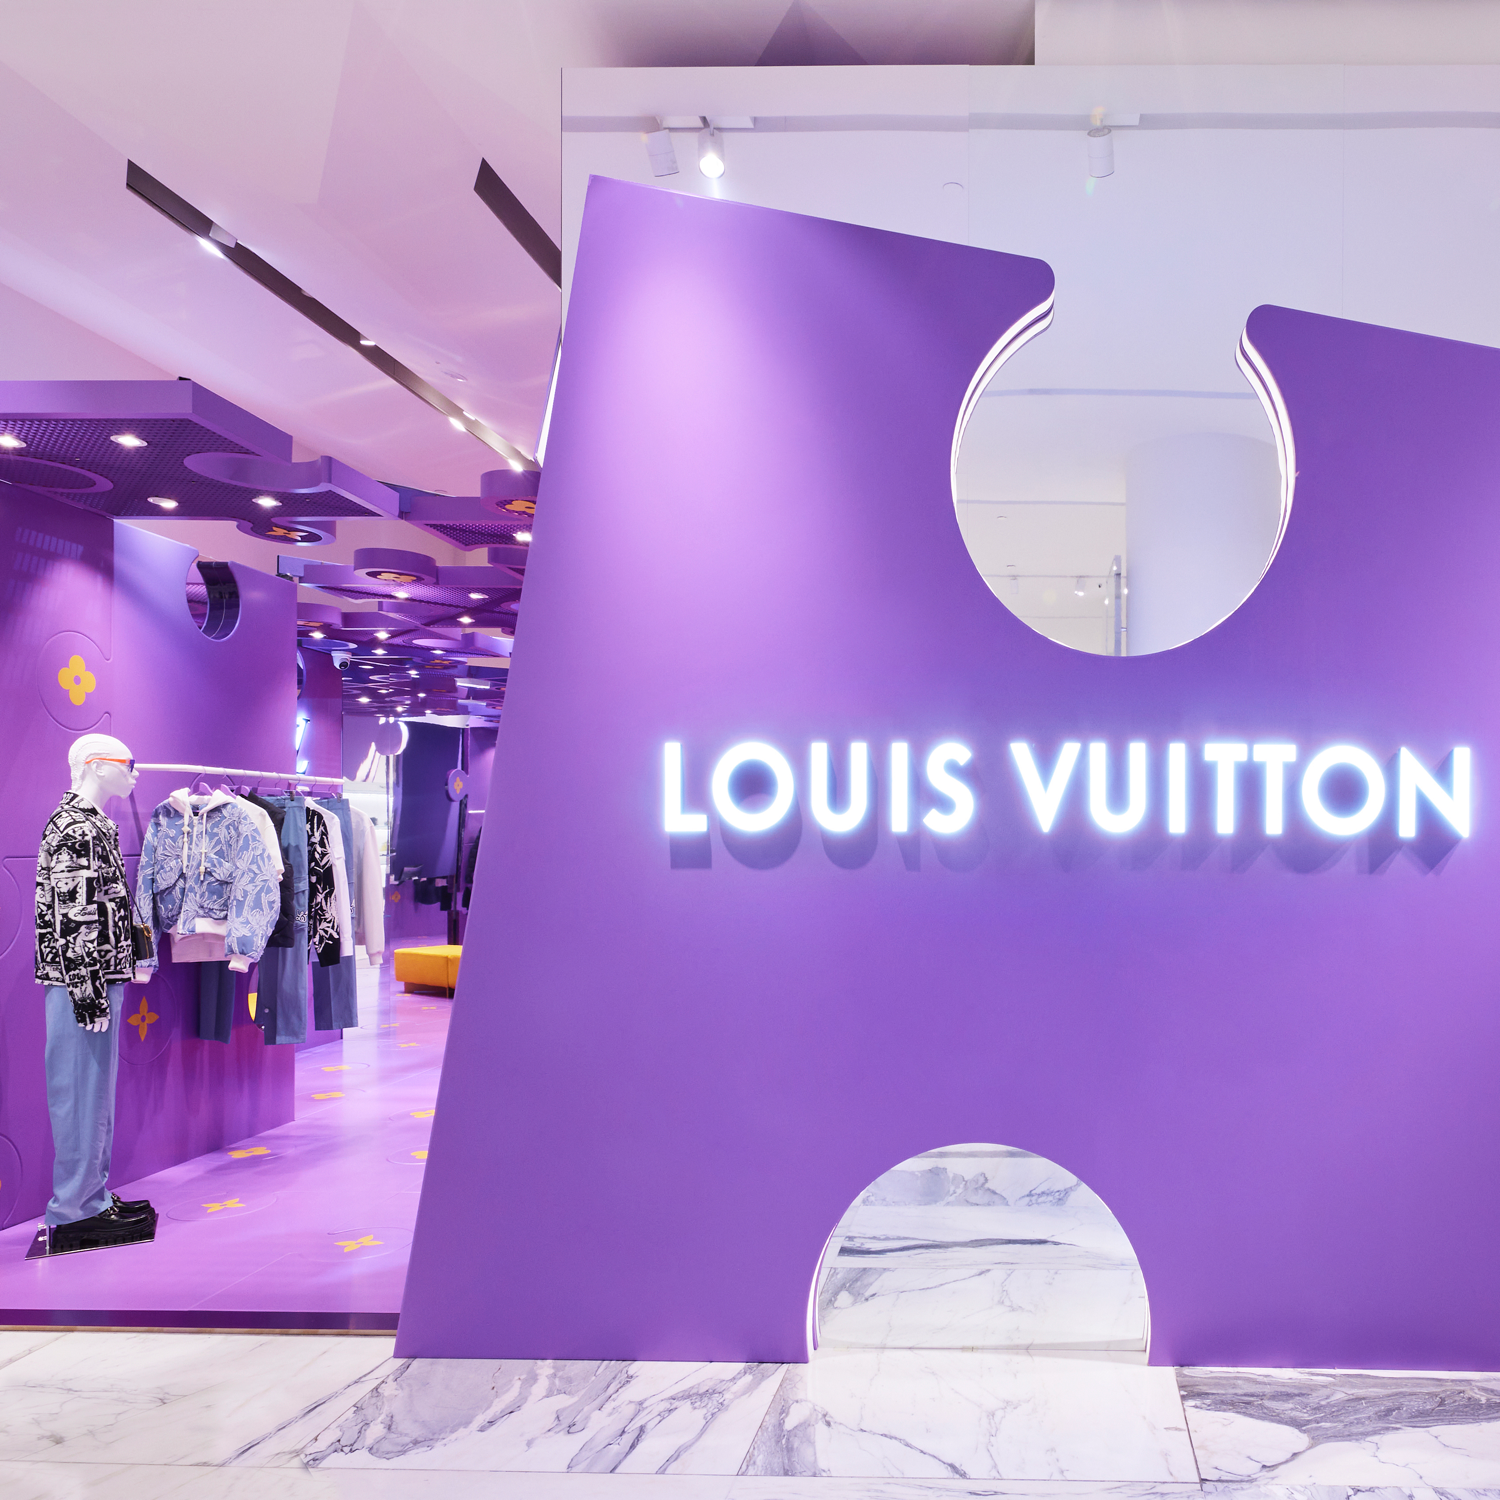 Louis Vuitton De Bijenkorf Amsterdam